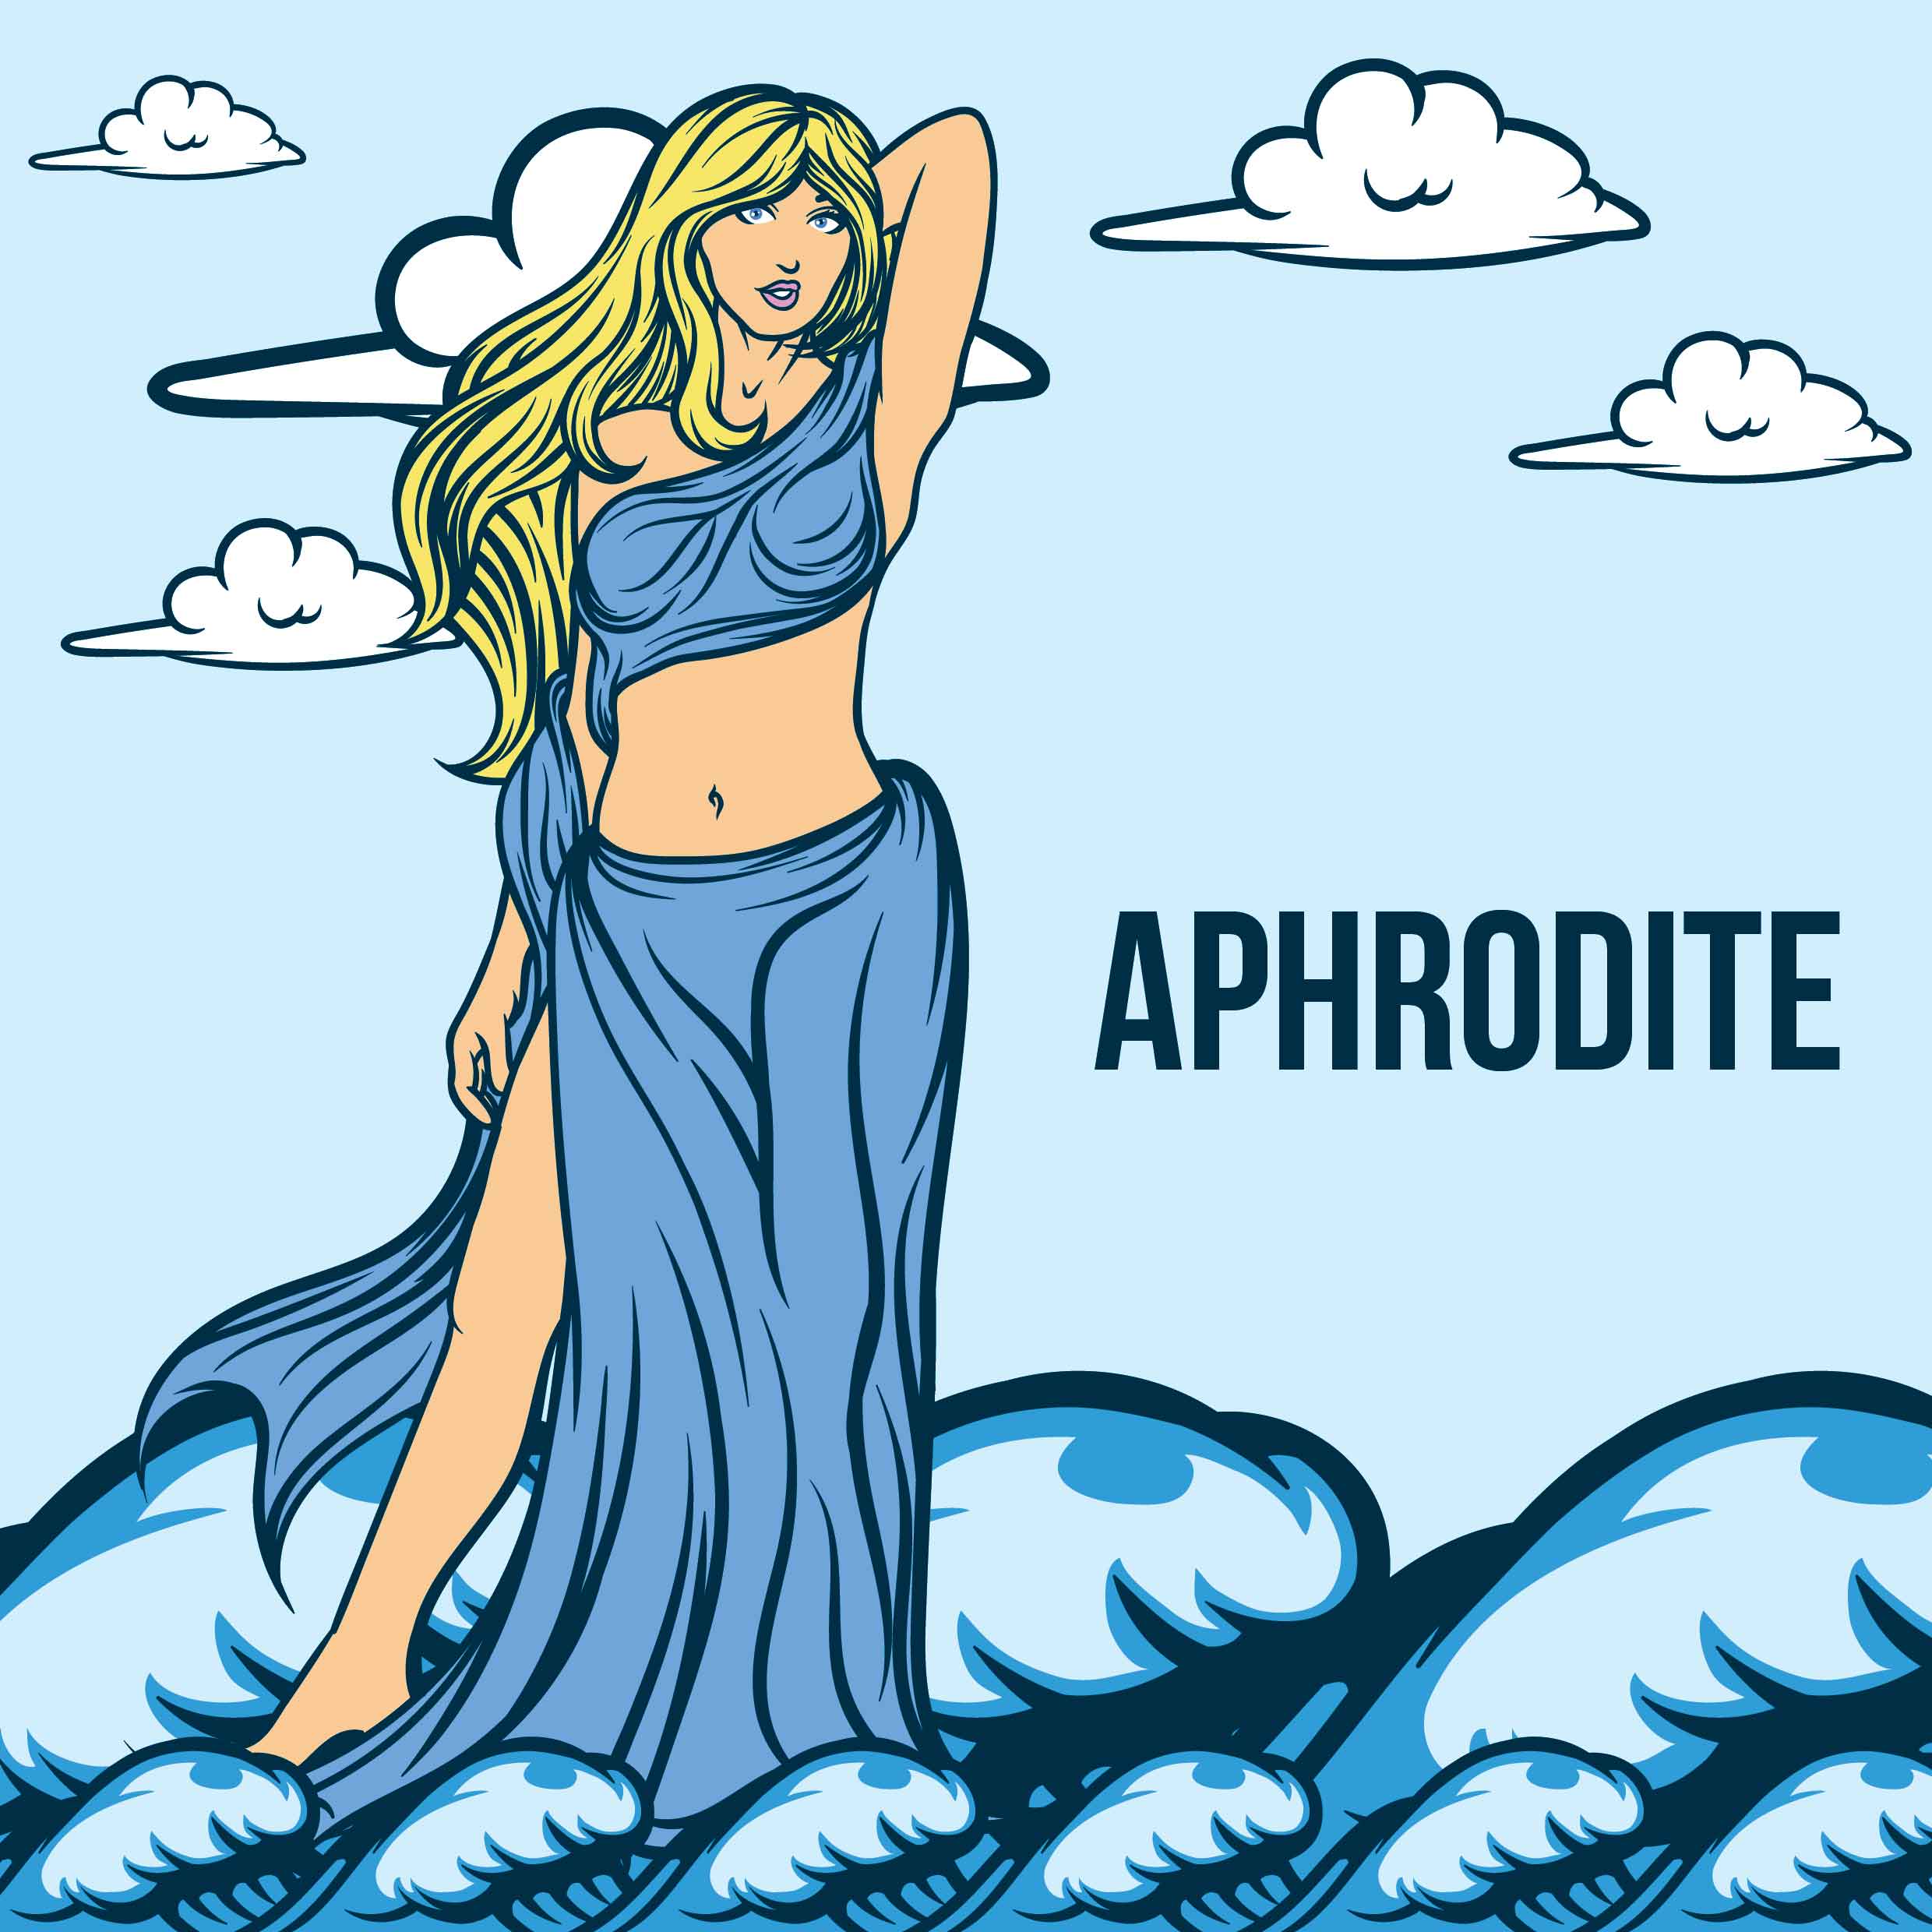 Download Aphrodite Illustration Vector for free.